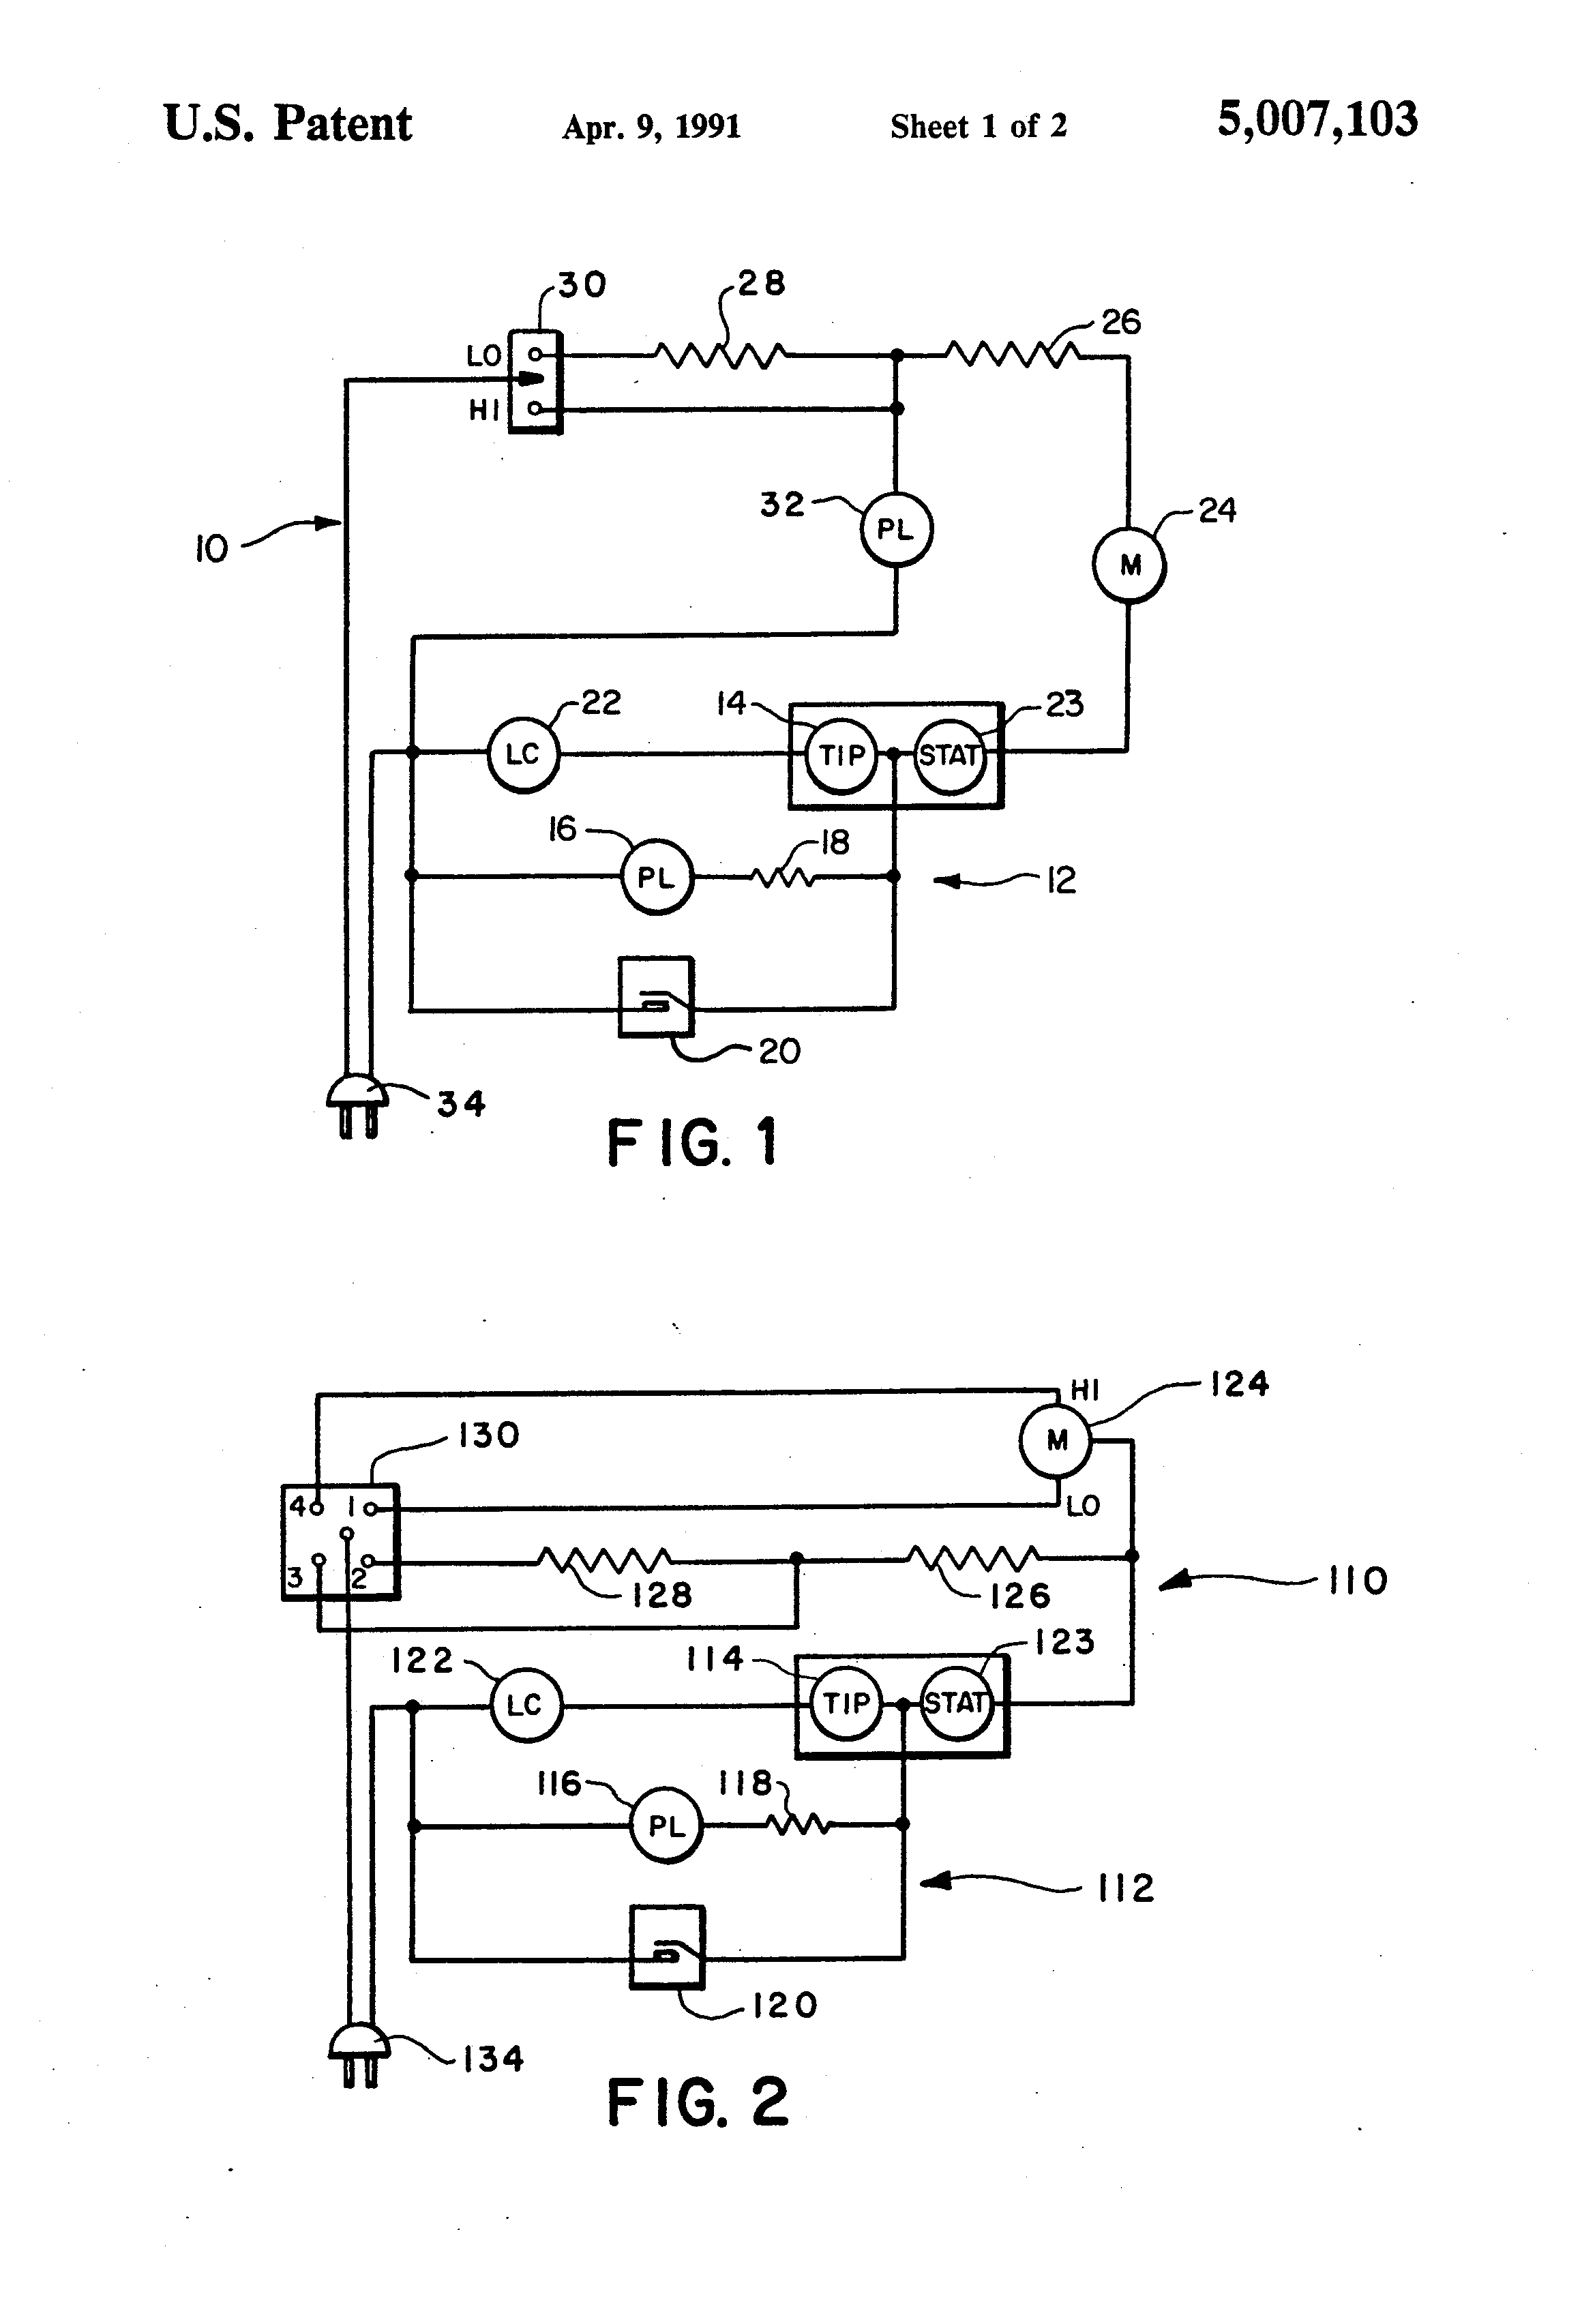 3 wire defrost termination switch wiring diagram